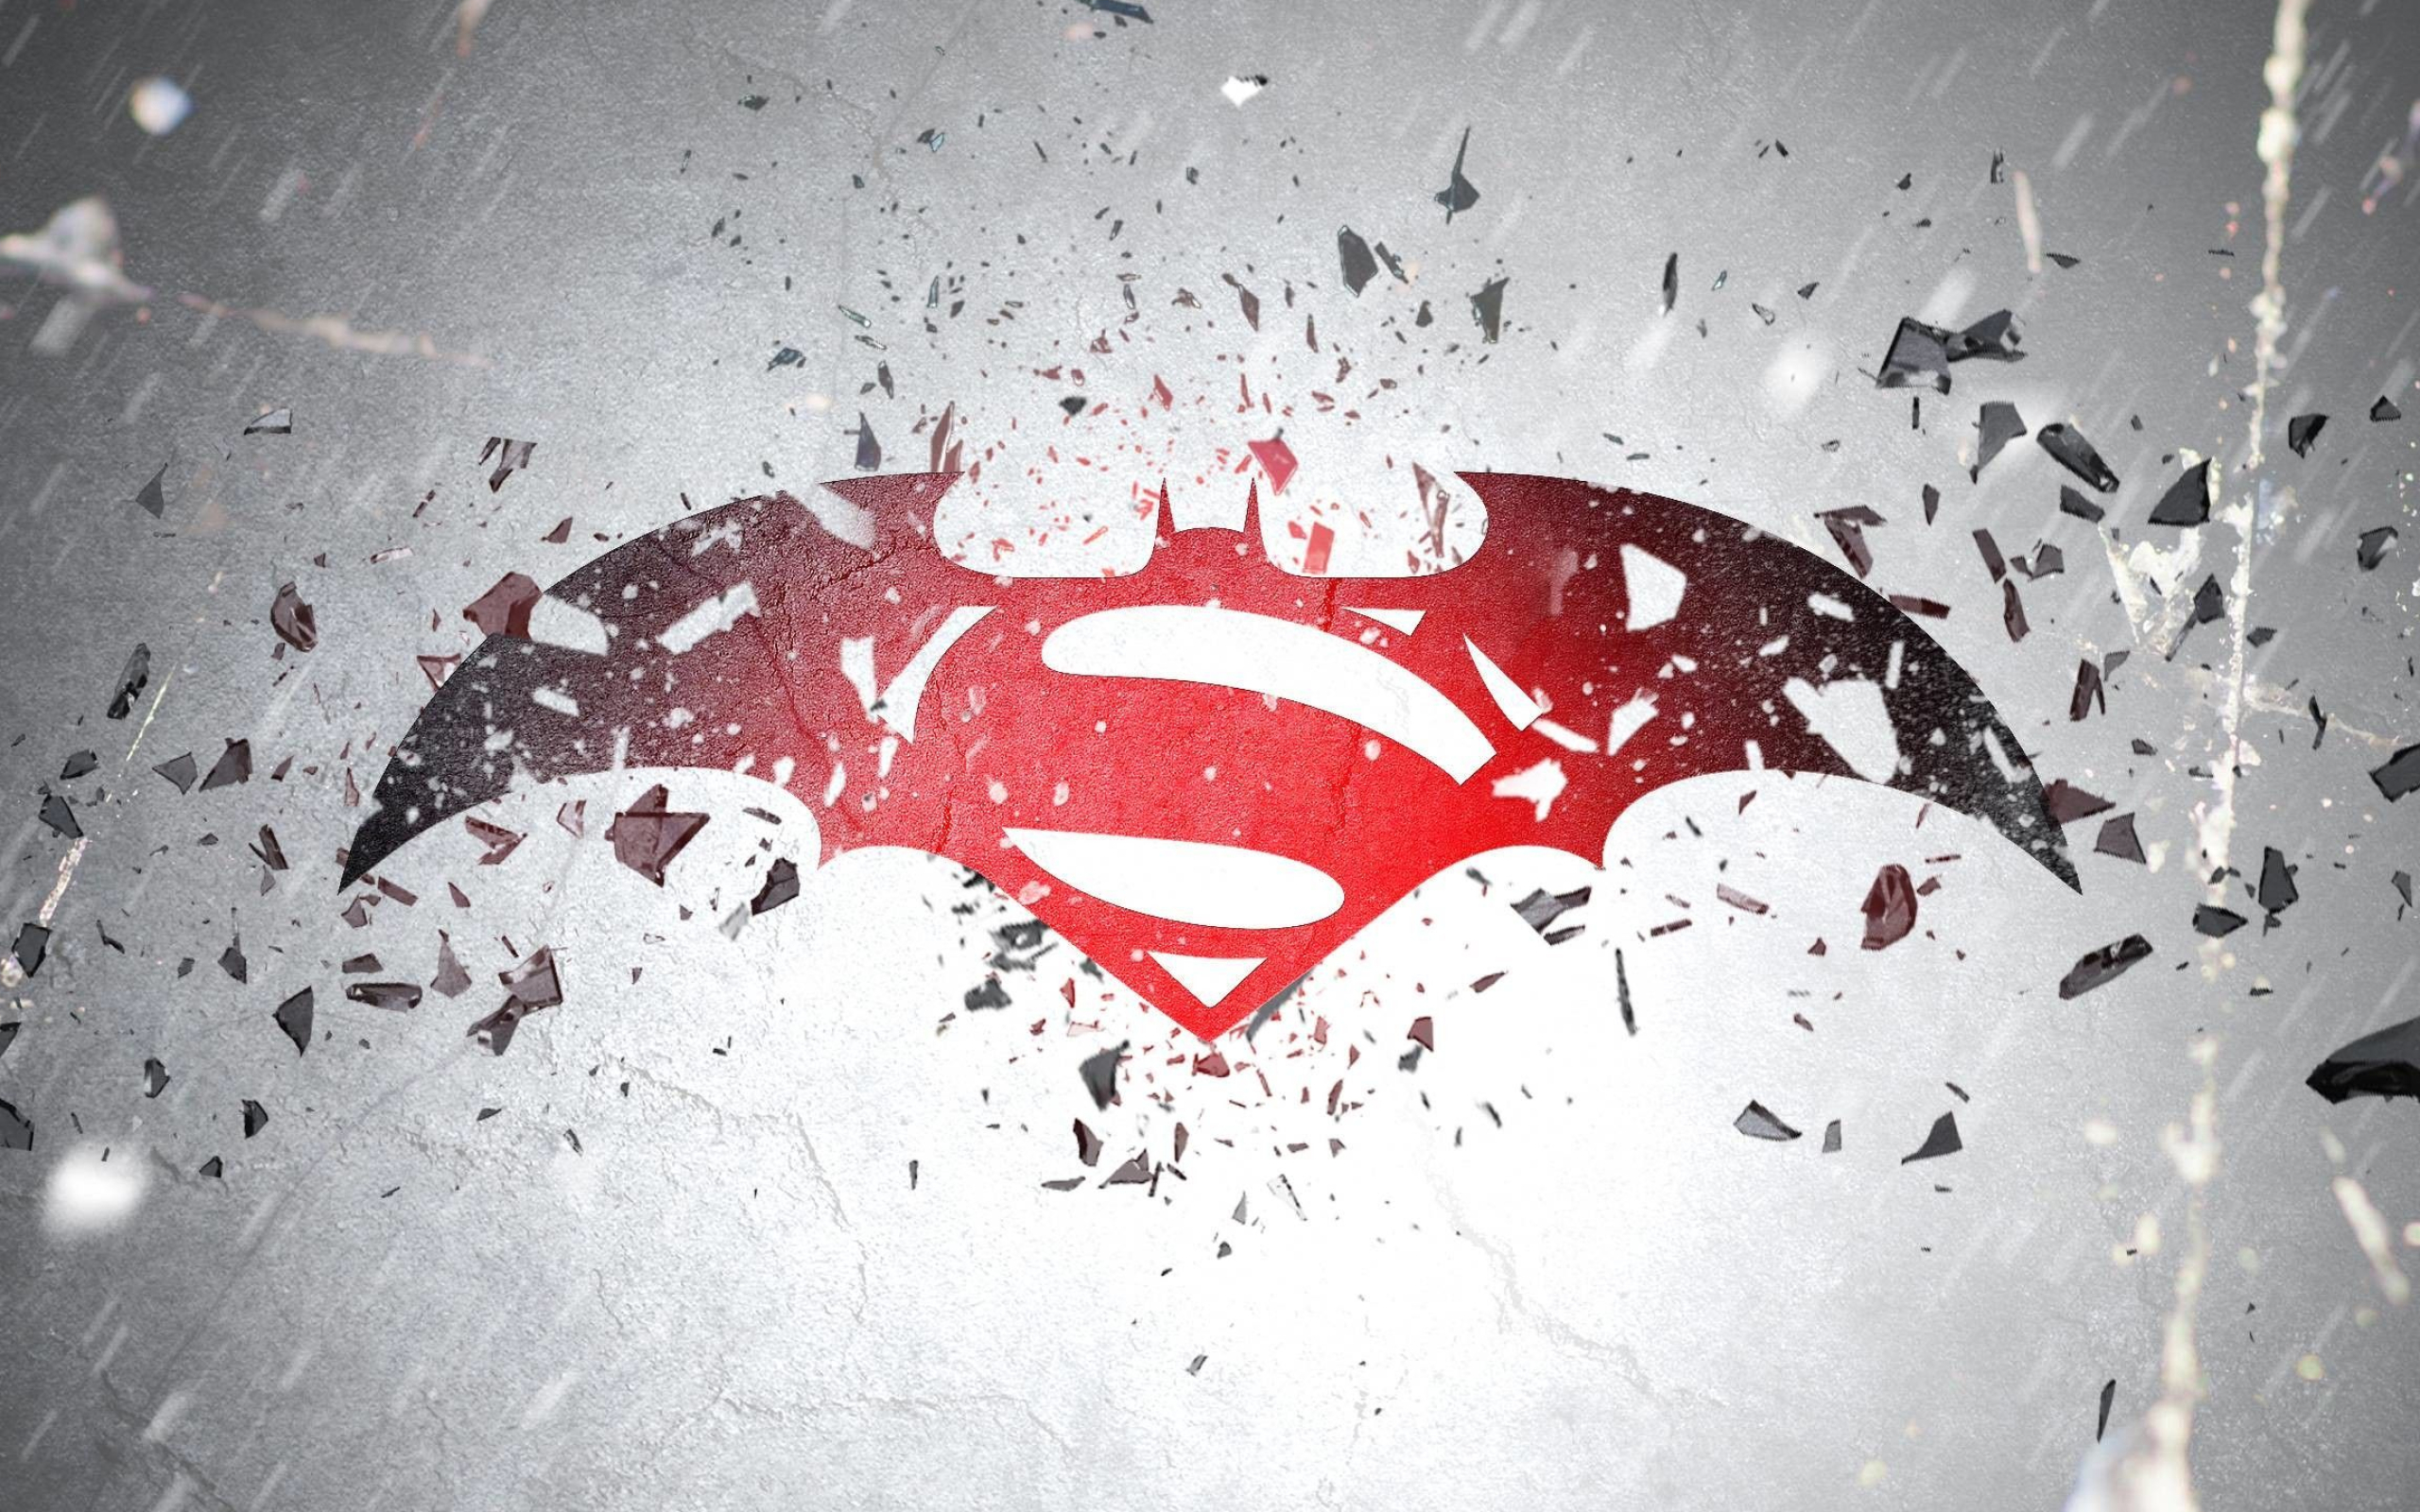 2560x1600 Superman and Batman Wallpapers Top Free Superman and Batman Backgrounds